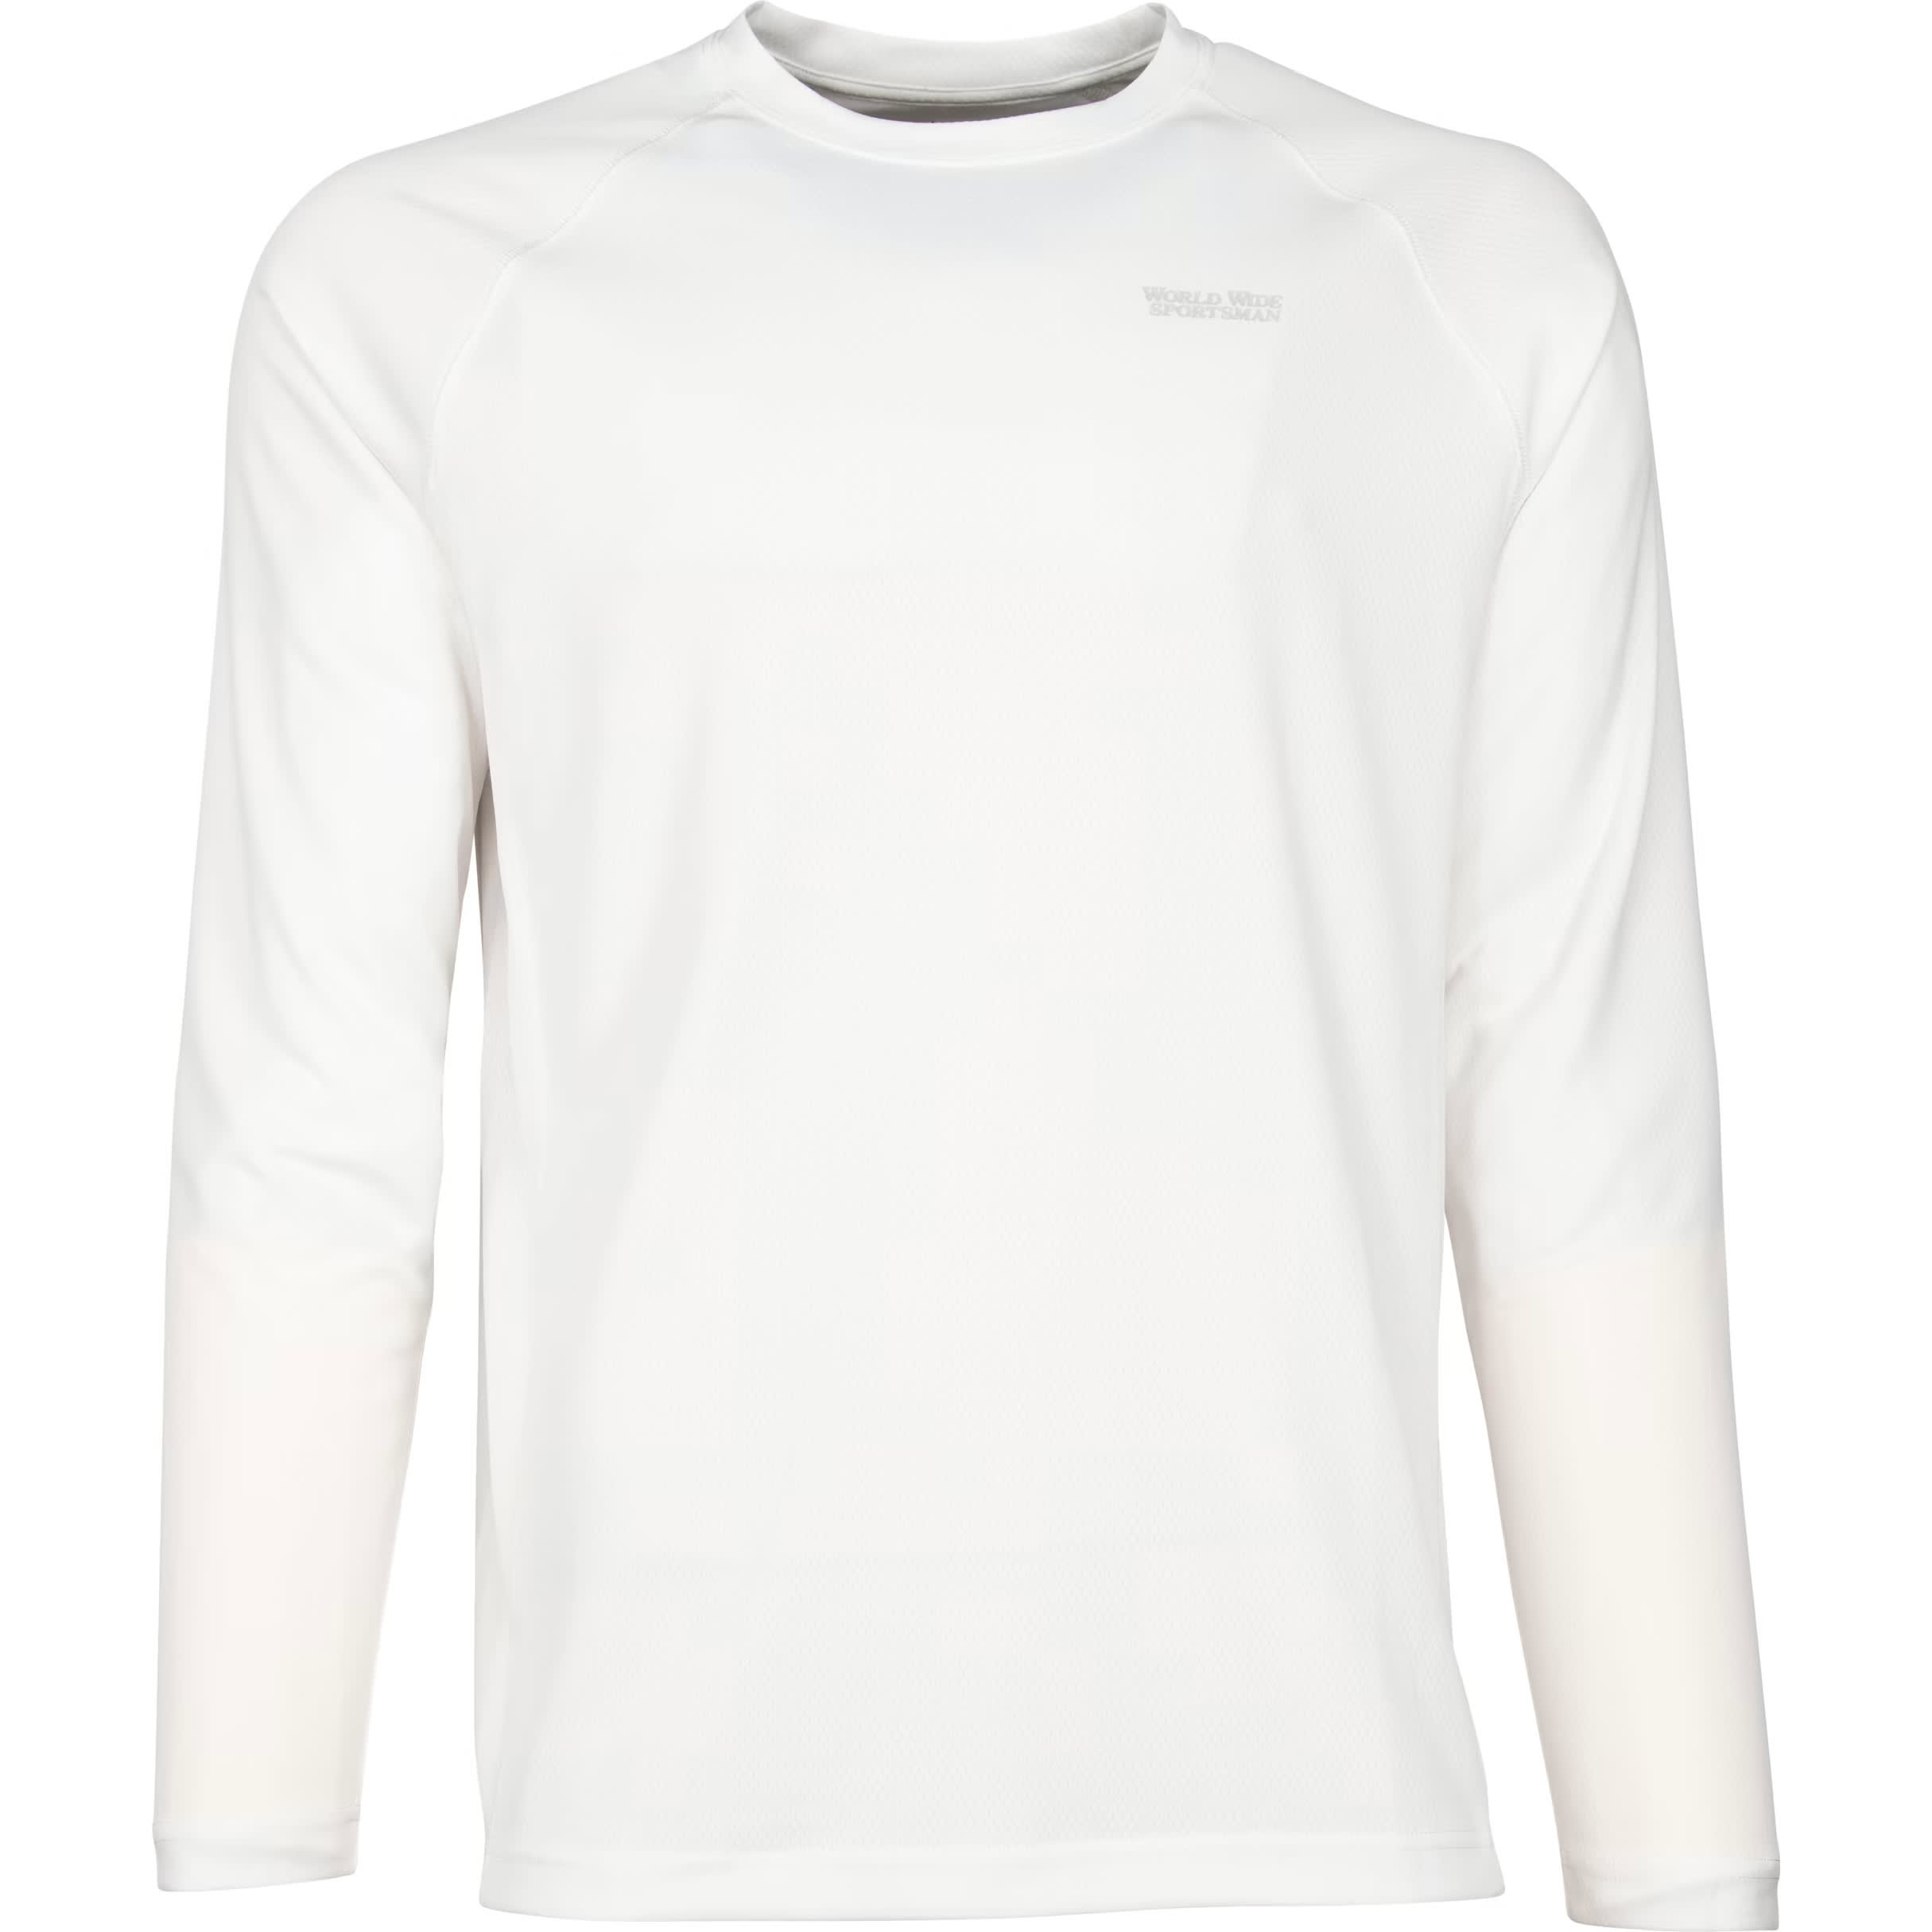 Huk® Men's Vented Pursuit Long-Sleeve Shirt